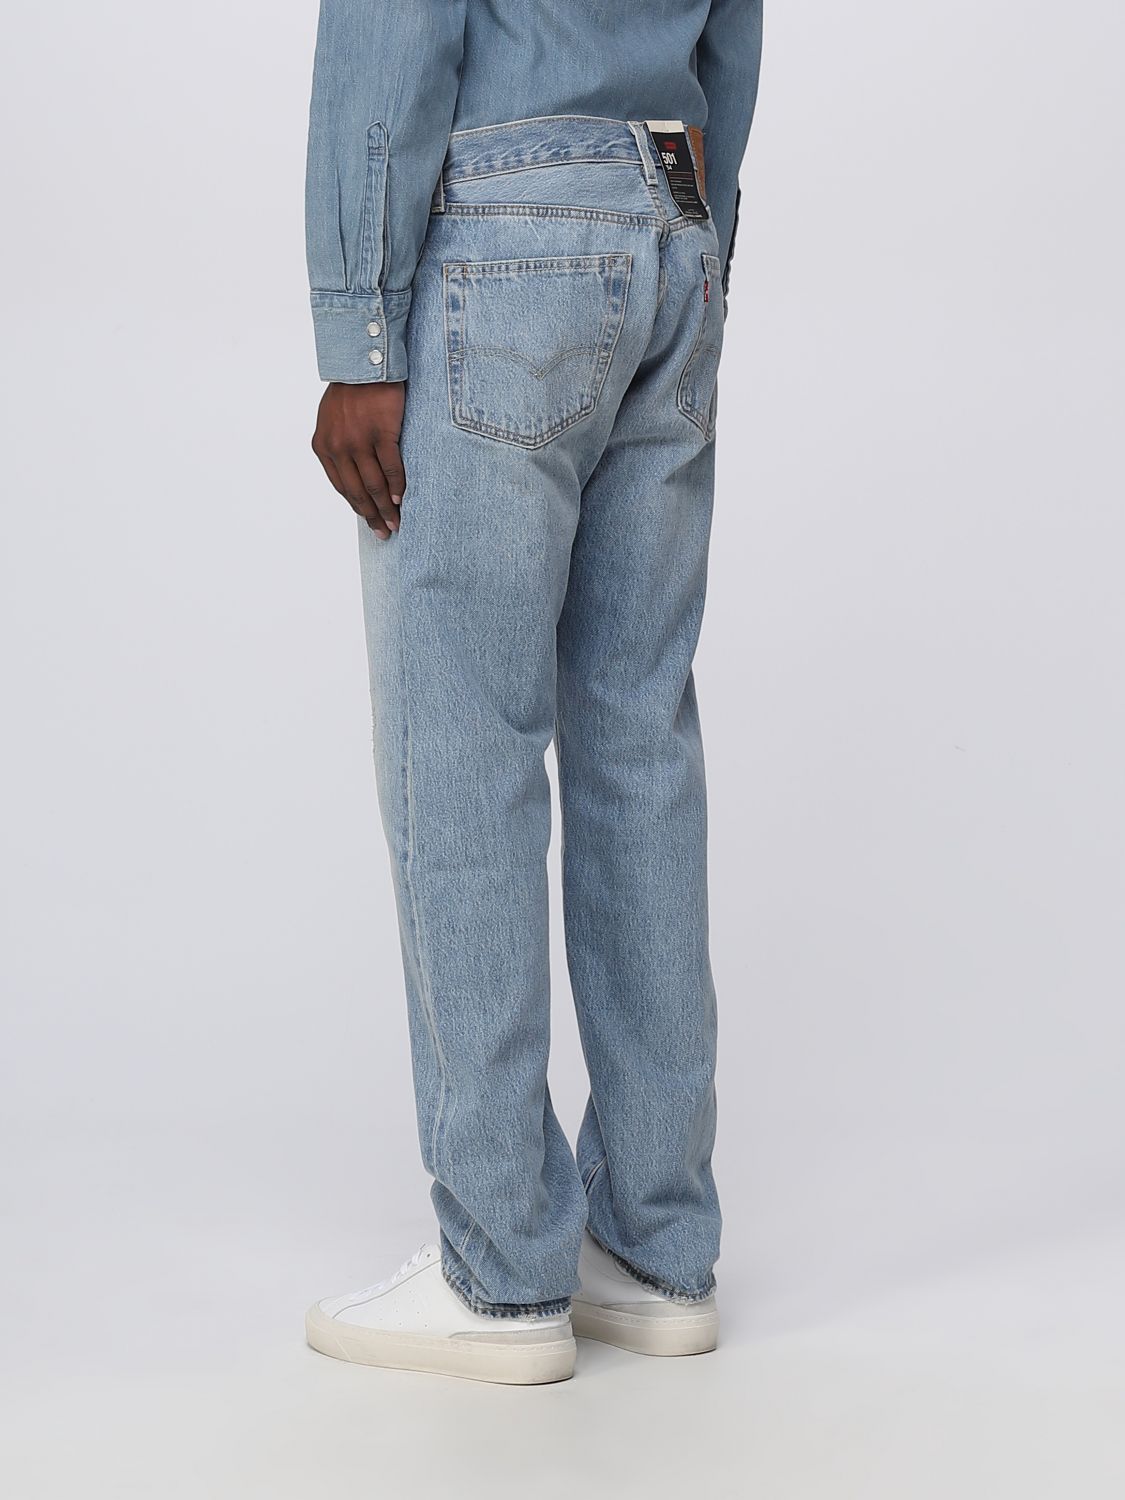 LEVI'S: jeans for man - Indigo | Levi's jeans A46770006 online on ...